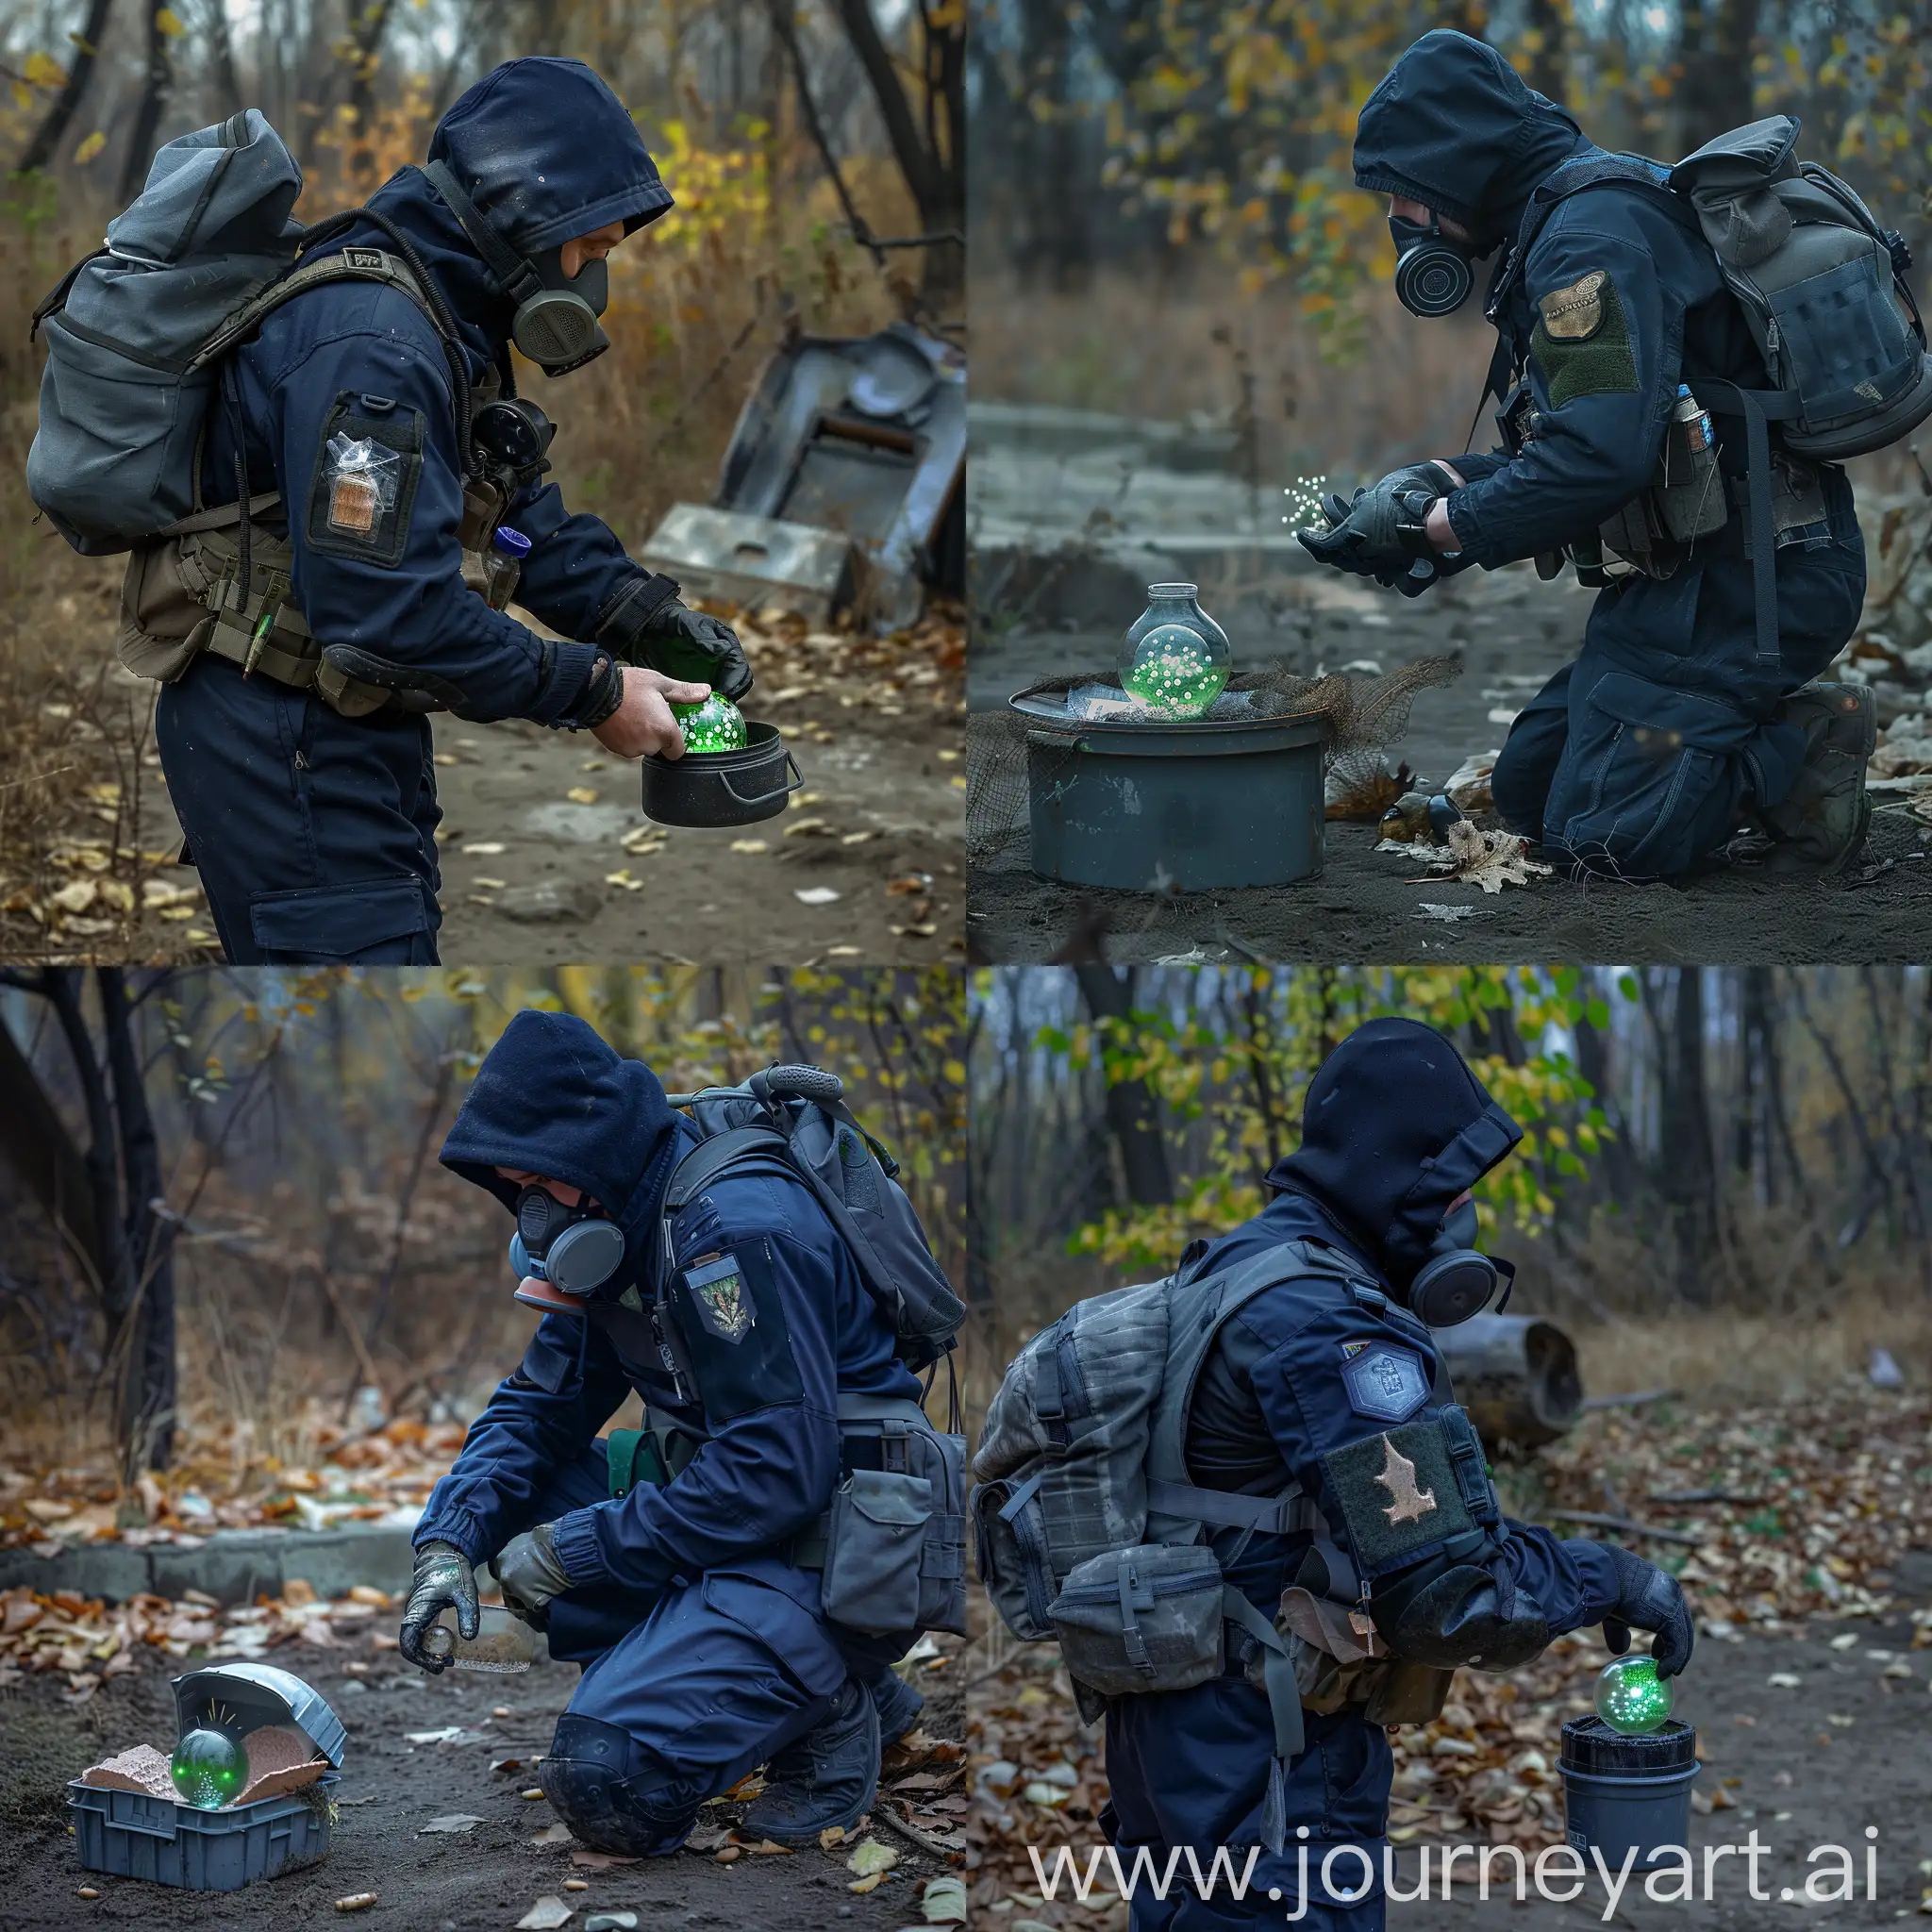 Chernobyl-Mercenary-Collecting-Glowing-Artifact-in-Gloomy-Autumn-Setting